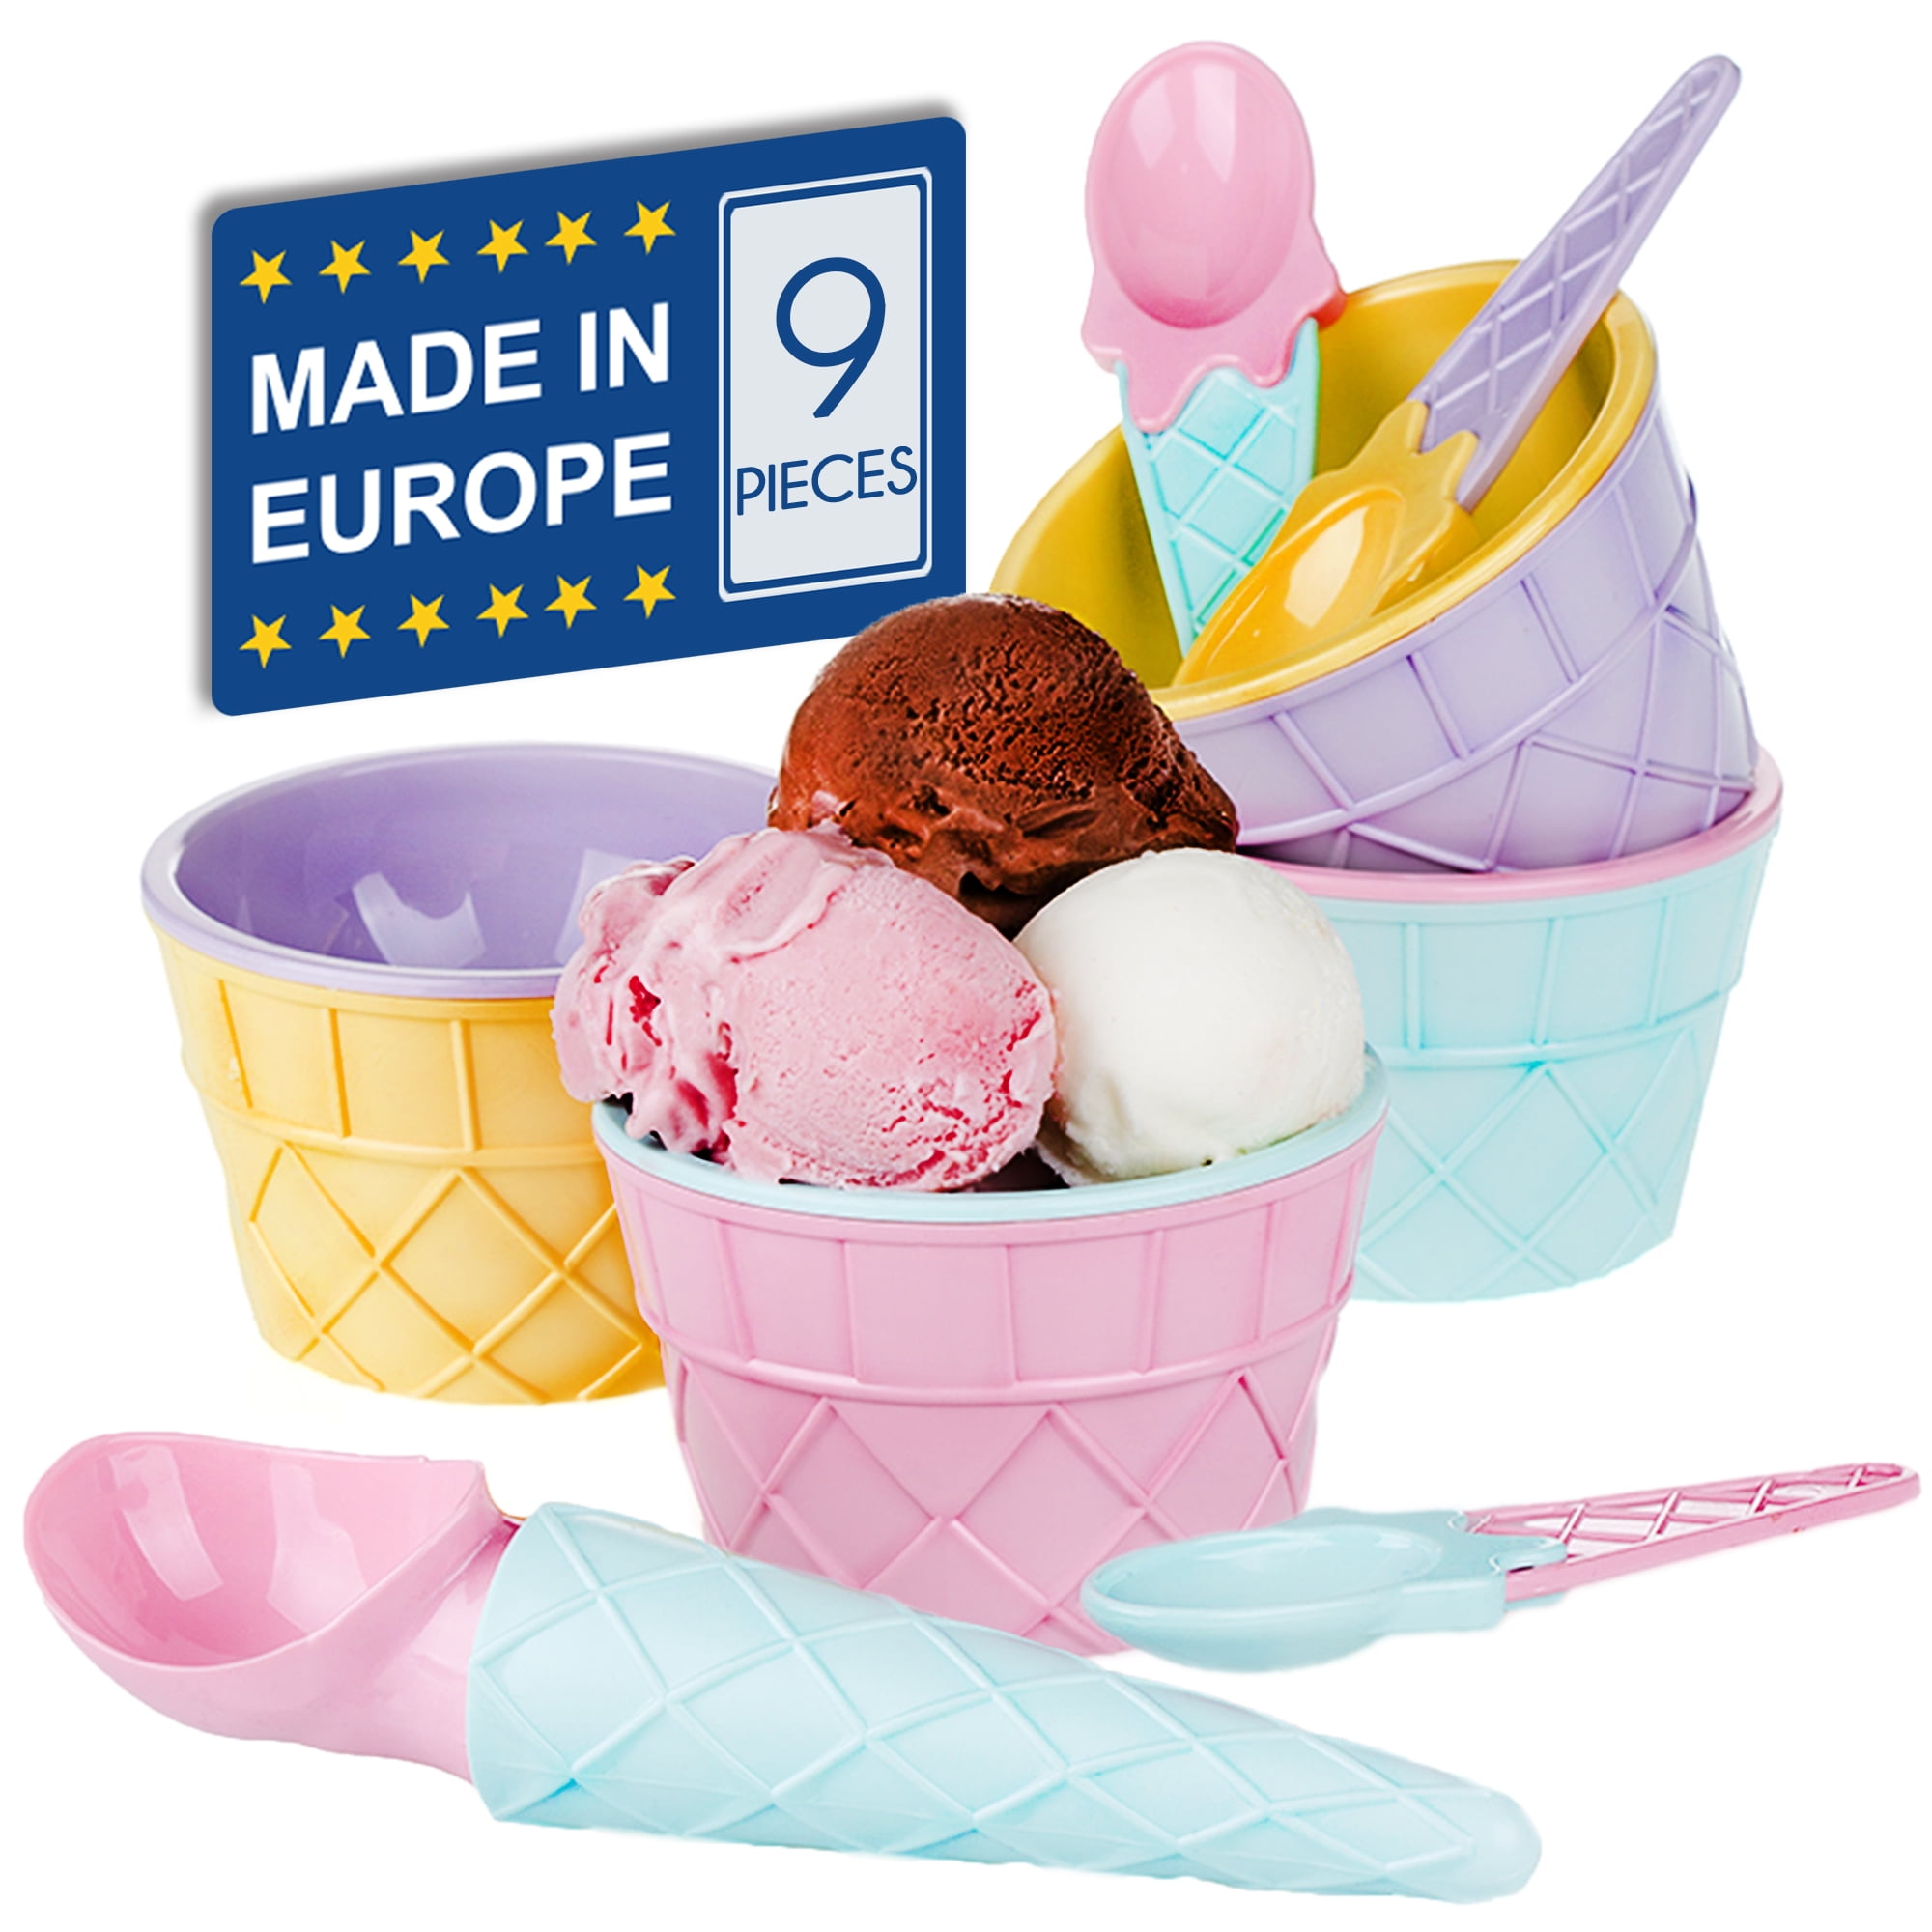 Pink Spoon Rest Ice Cream Cone 8 Inches Ceramic New 